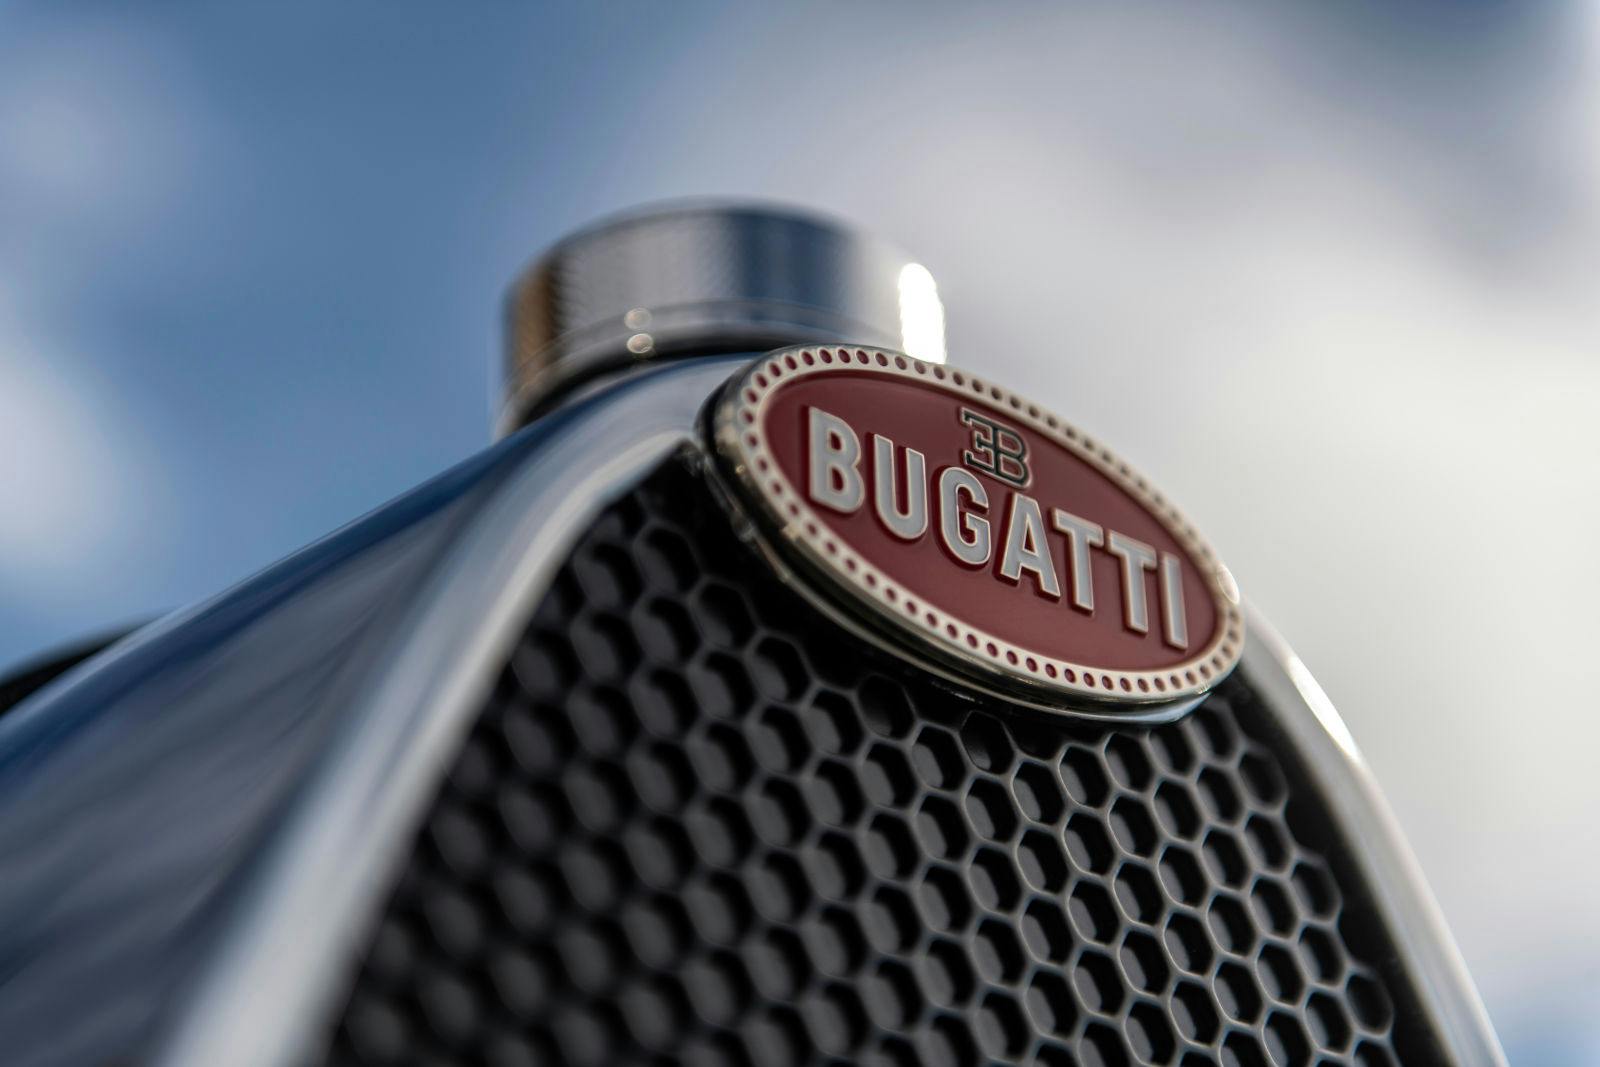 The Bugatti Baby II proudly displays its 50g solid silver Bugatti macaron.